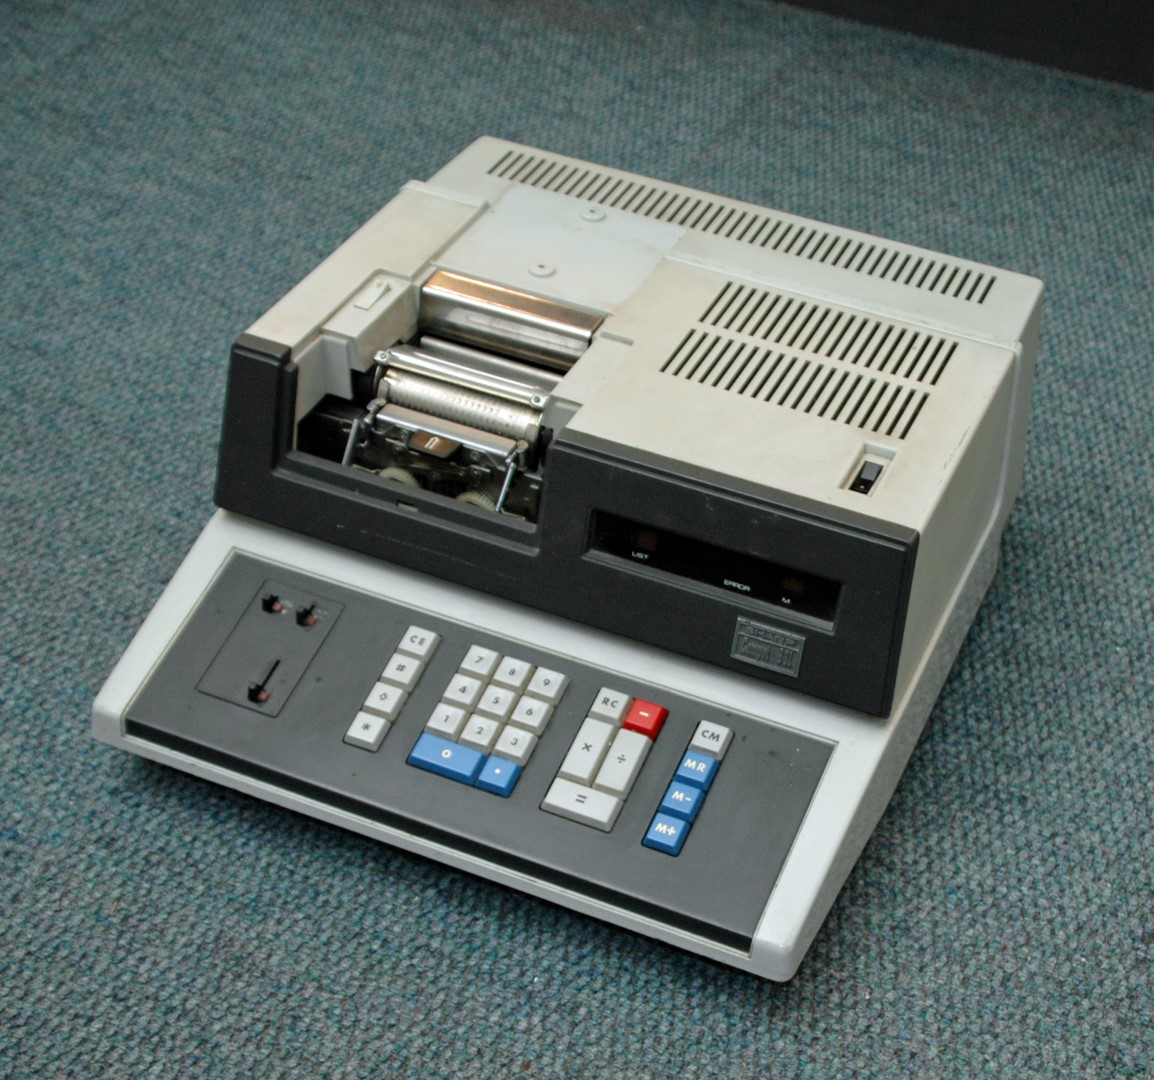 Sharp Compet 661 printing calculator